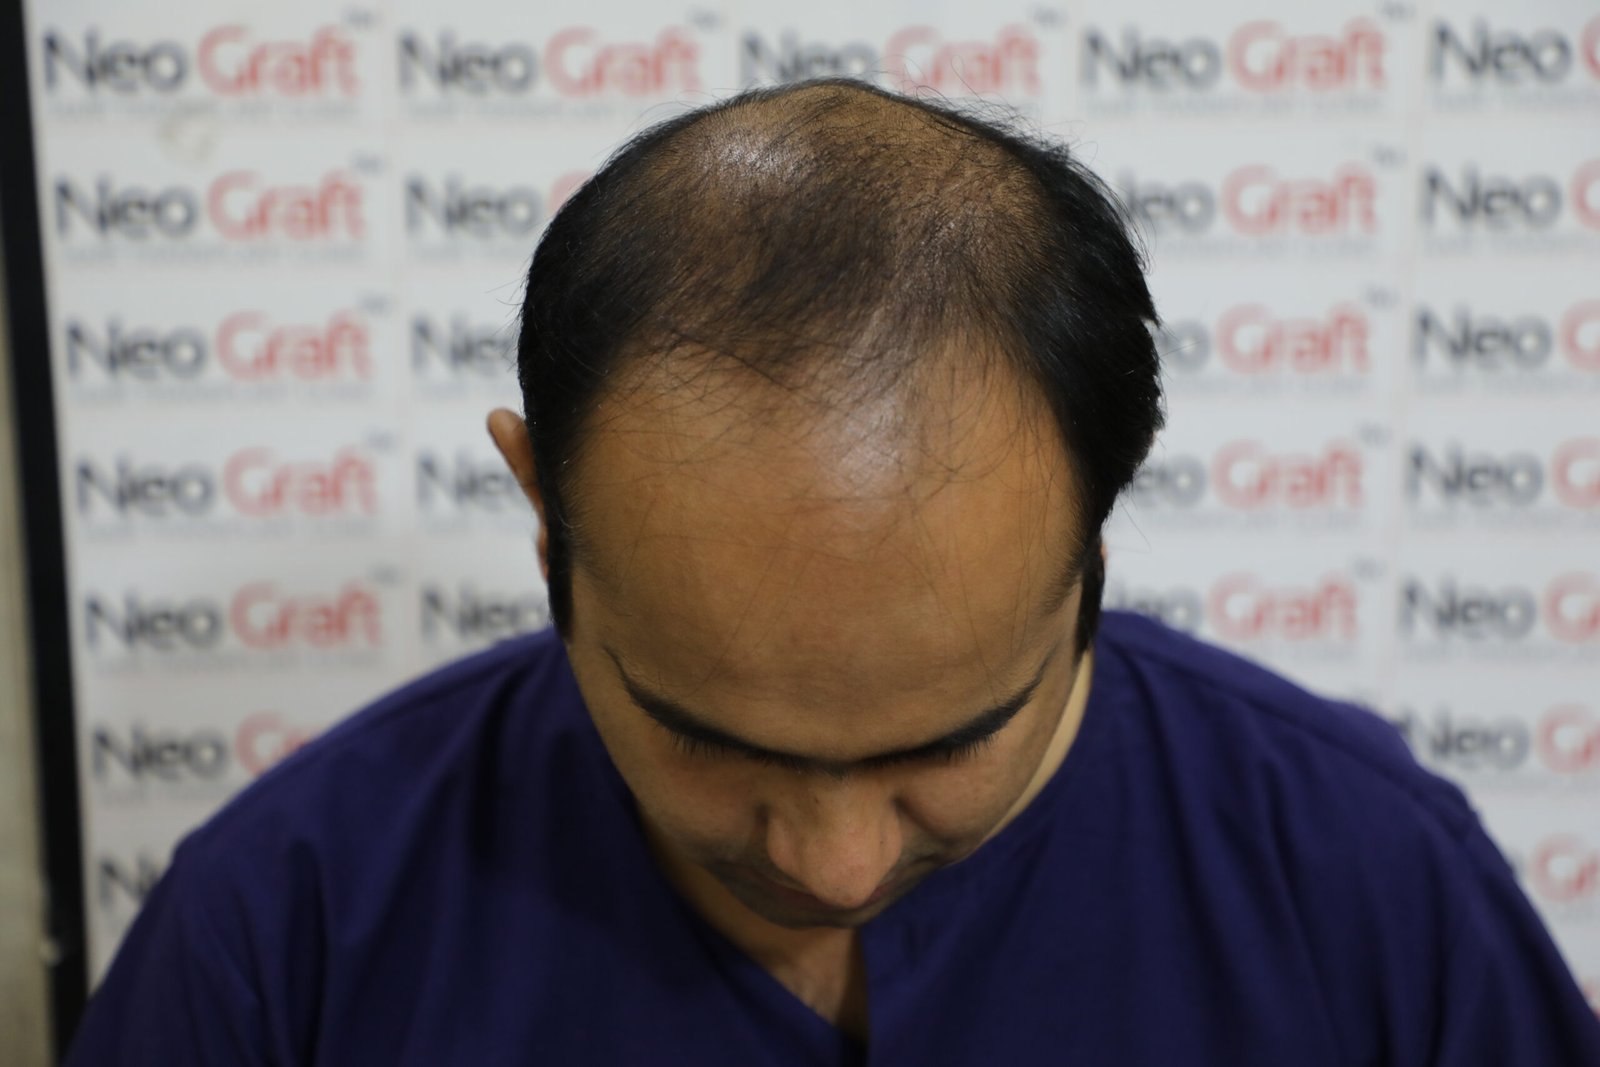 hair transplant neograft hair clinic chandigarh